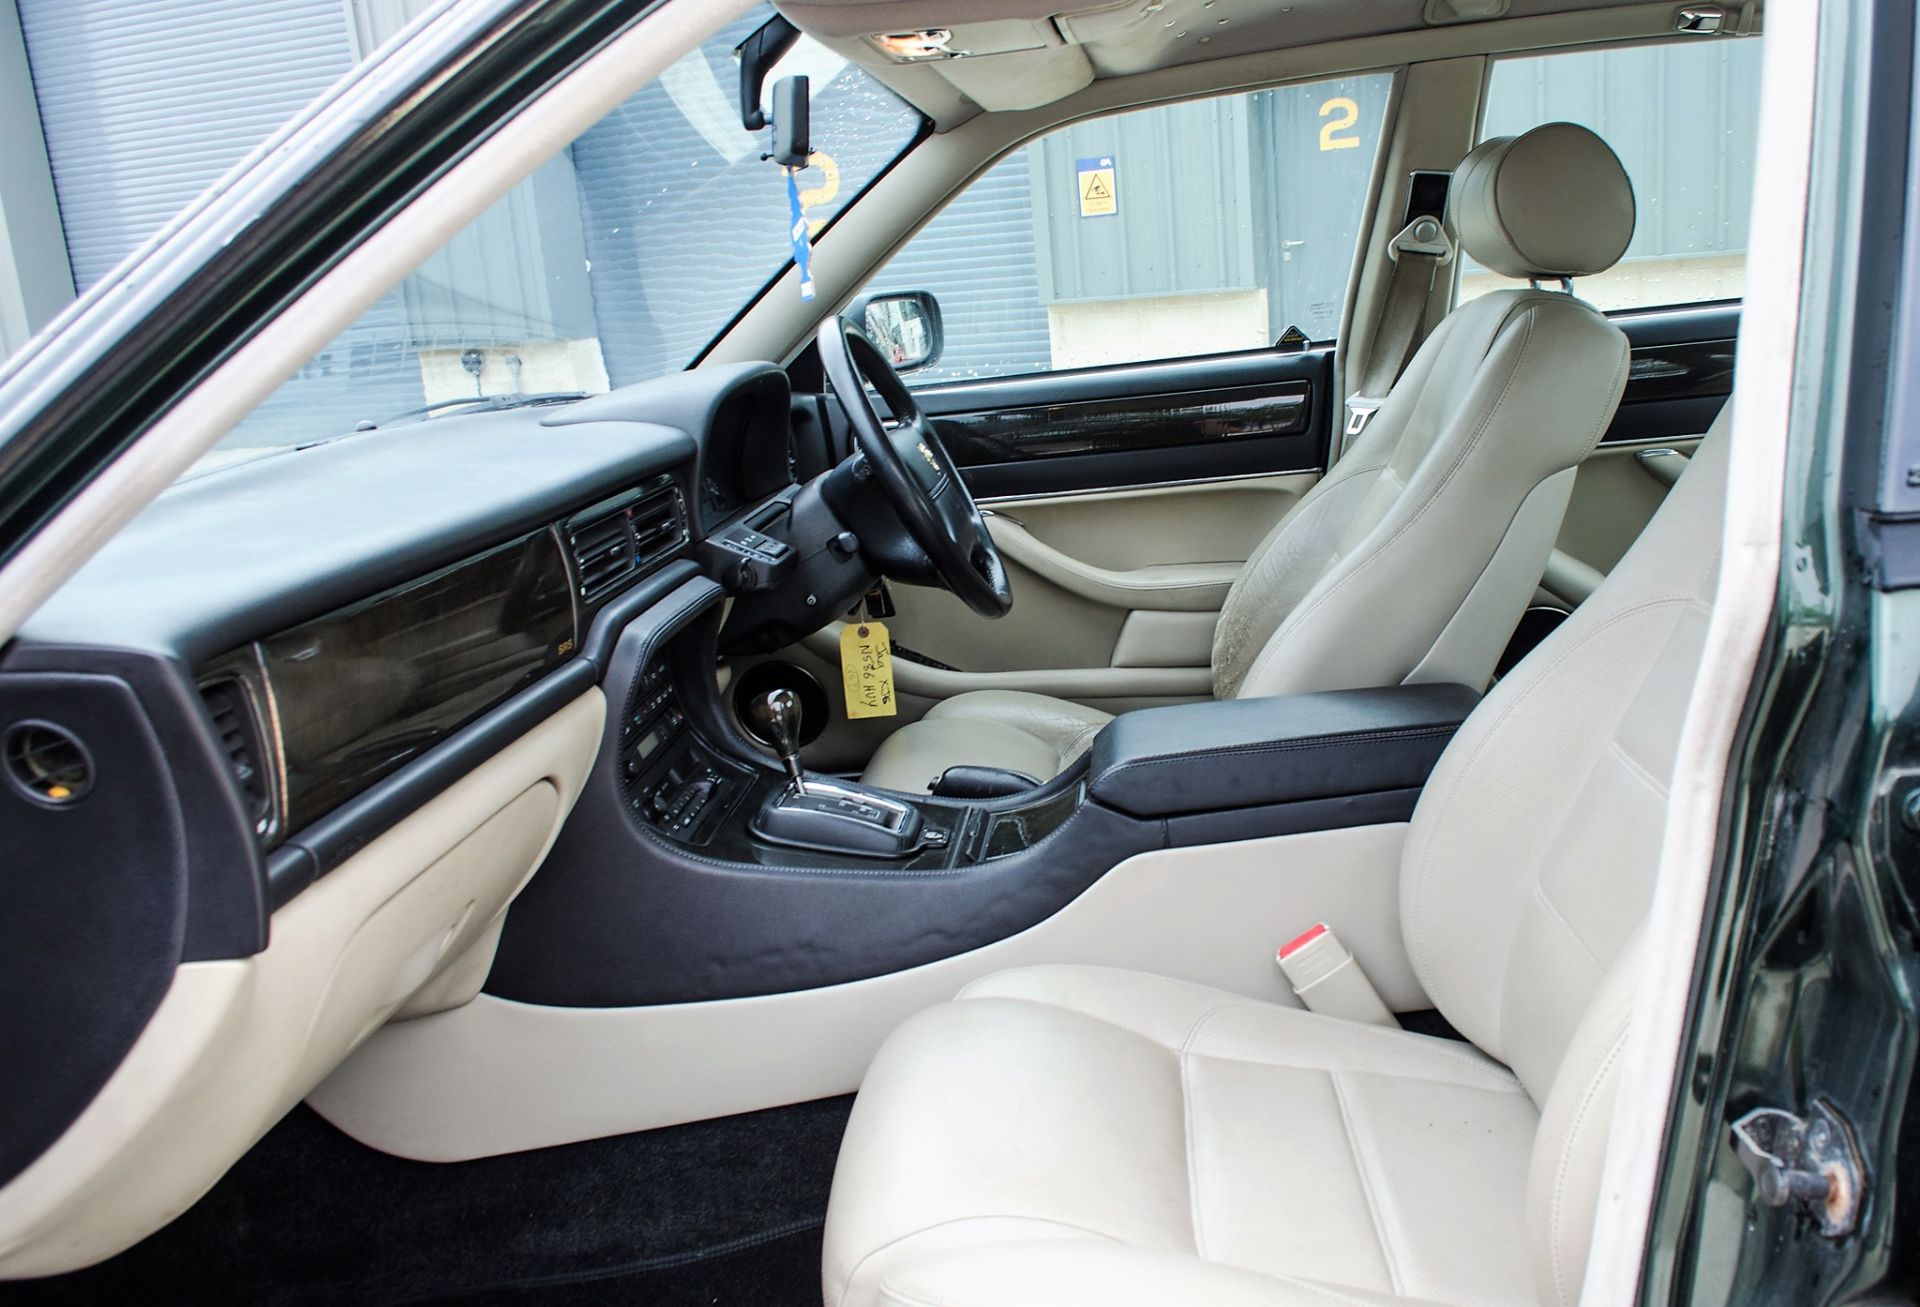 Jaguar XJ6 3.2 Sport petrol automatic 4 door saloon car Registration Number: N586 HUY Date of - Image 20 of 28